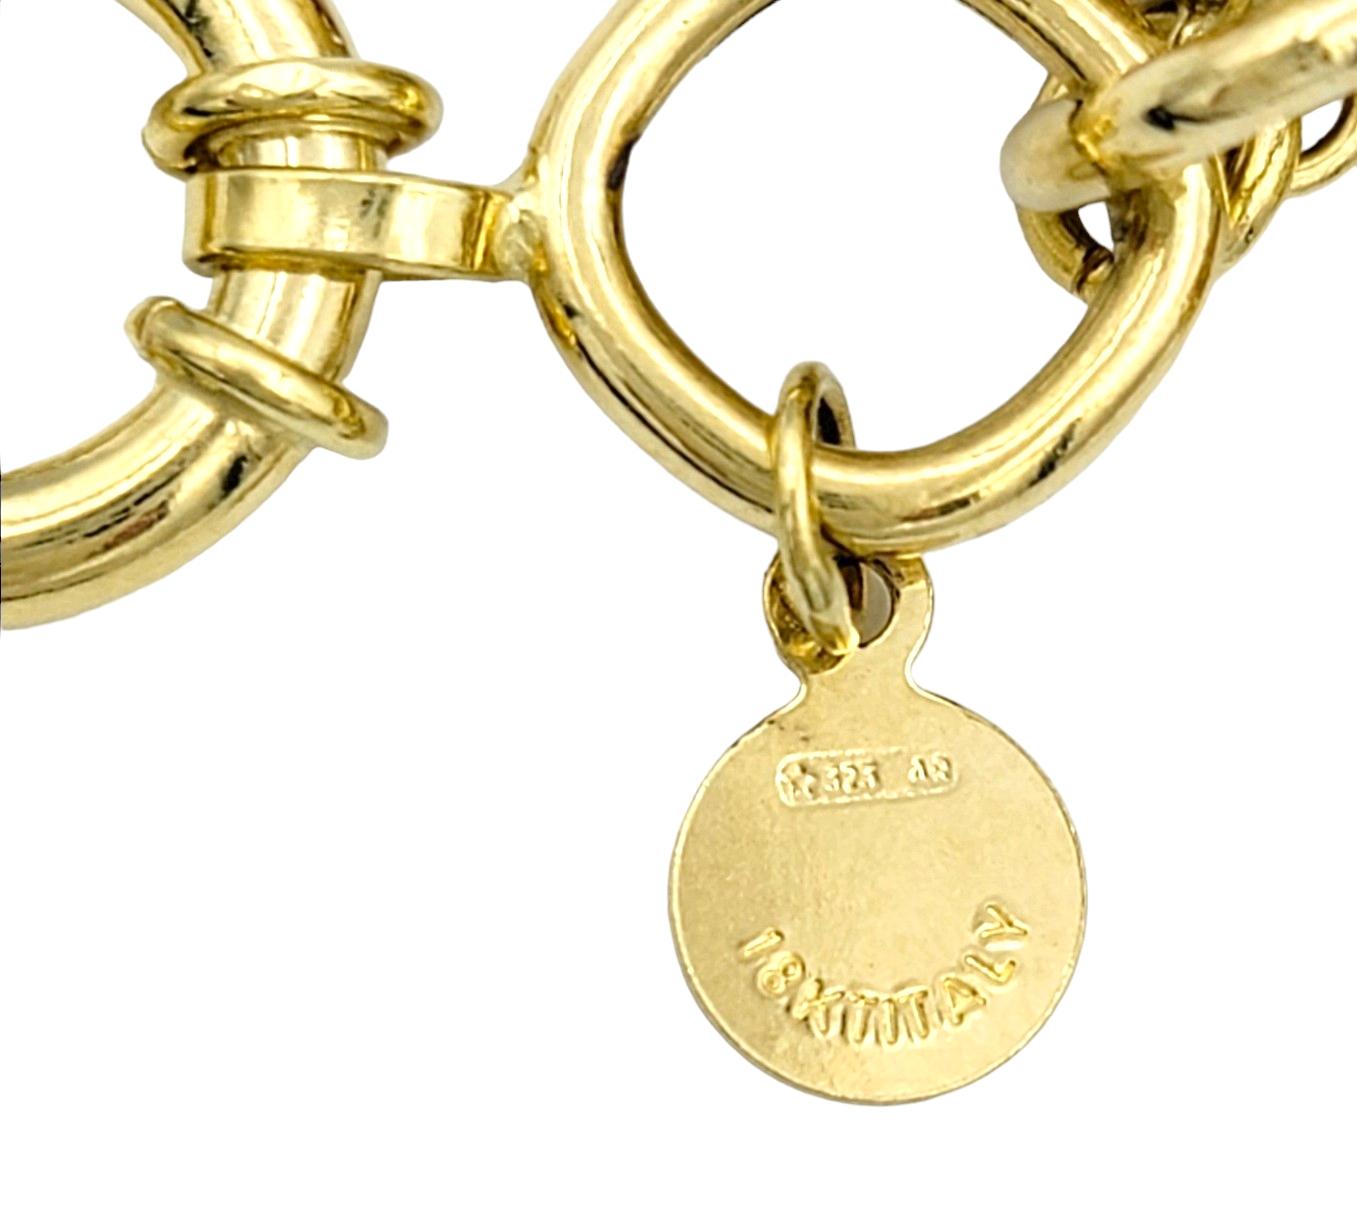 Multi-Colored Gemstone Dangle Charm Bracelet Set in 18 Karat Yellow Gold 4